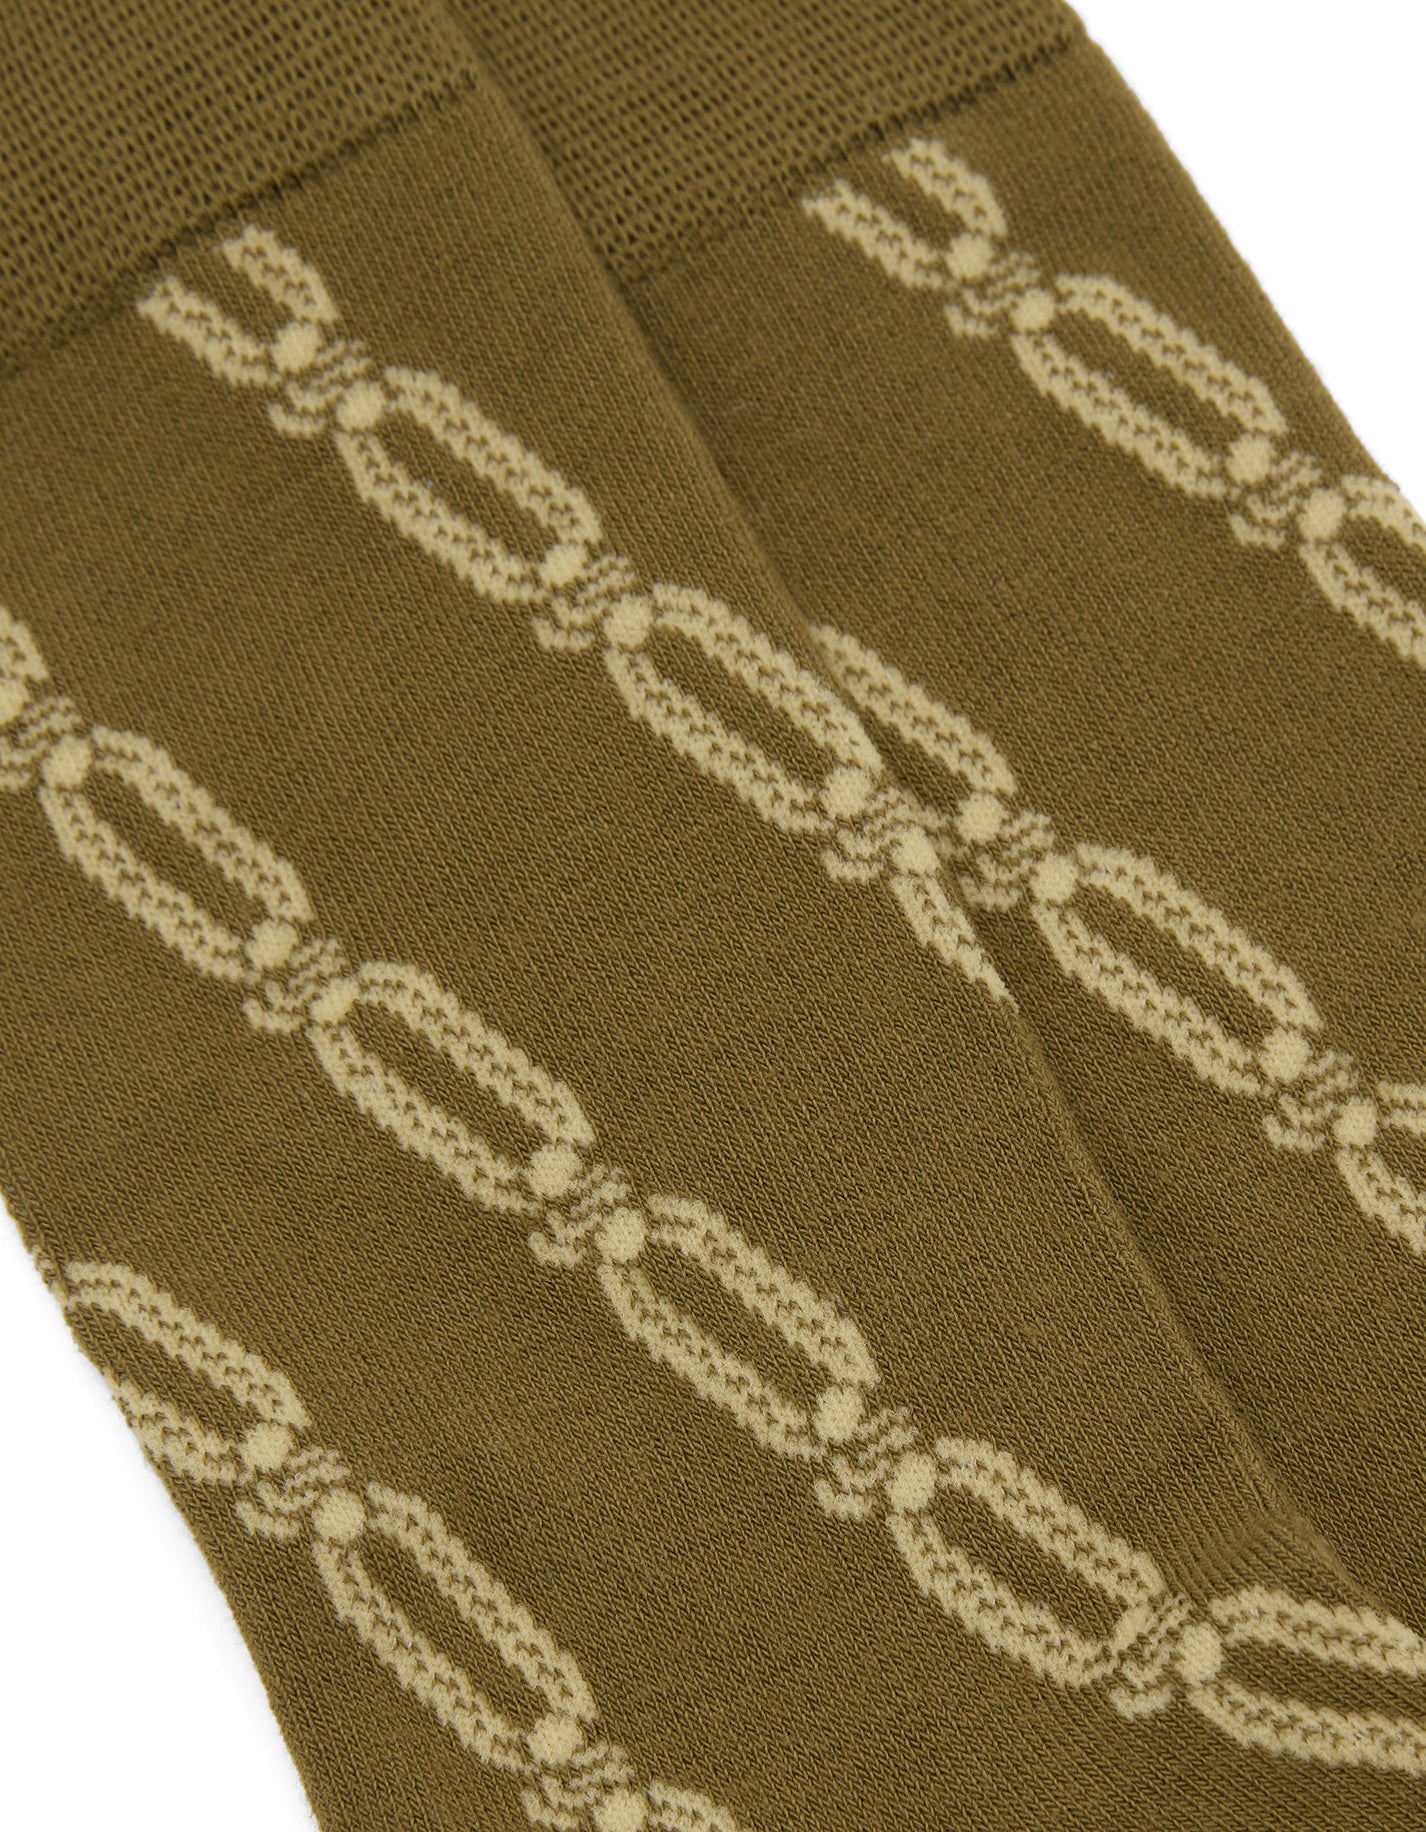 Peaky Blinders - Green Chain Bamboo Socks Size 7-12